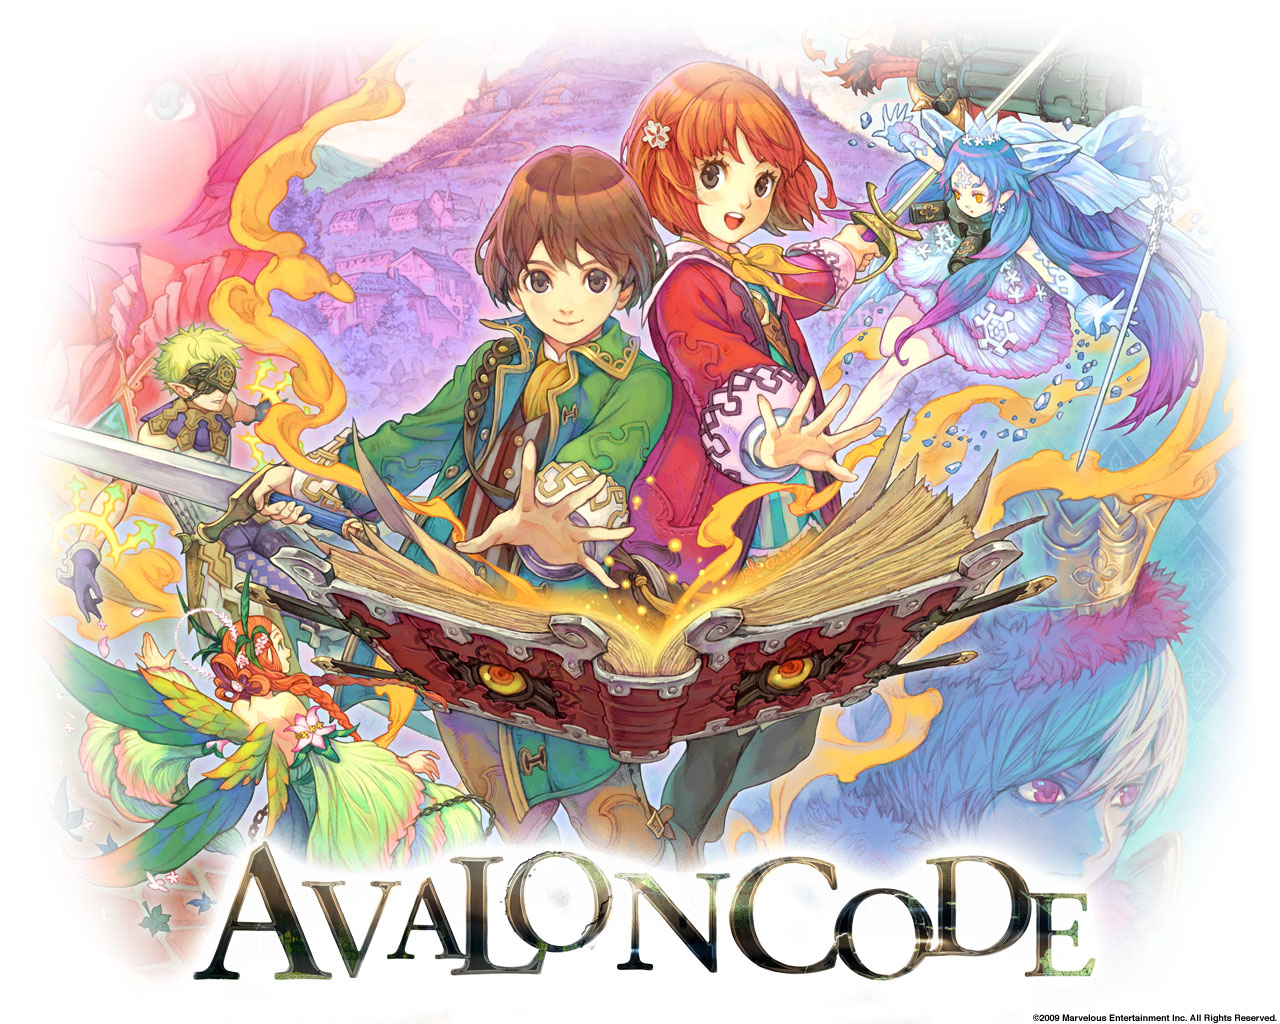 Avalon Code #22